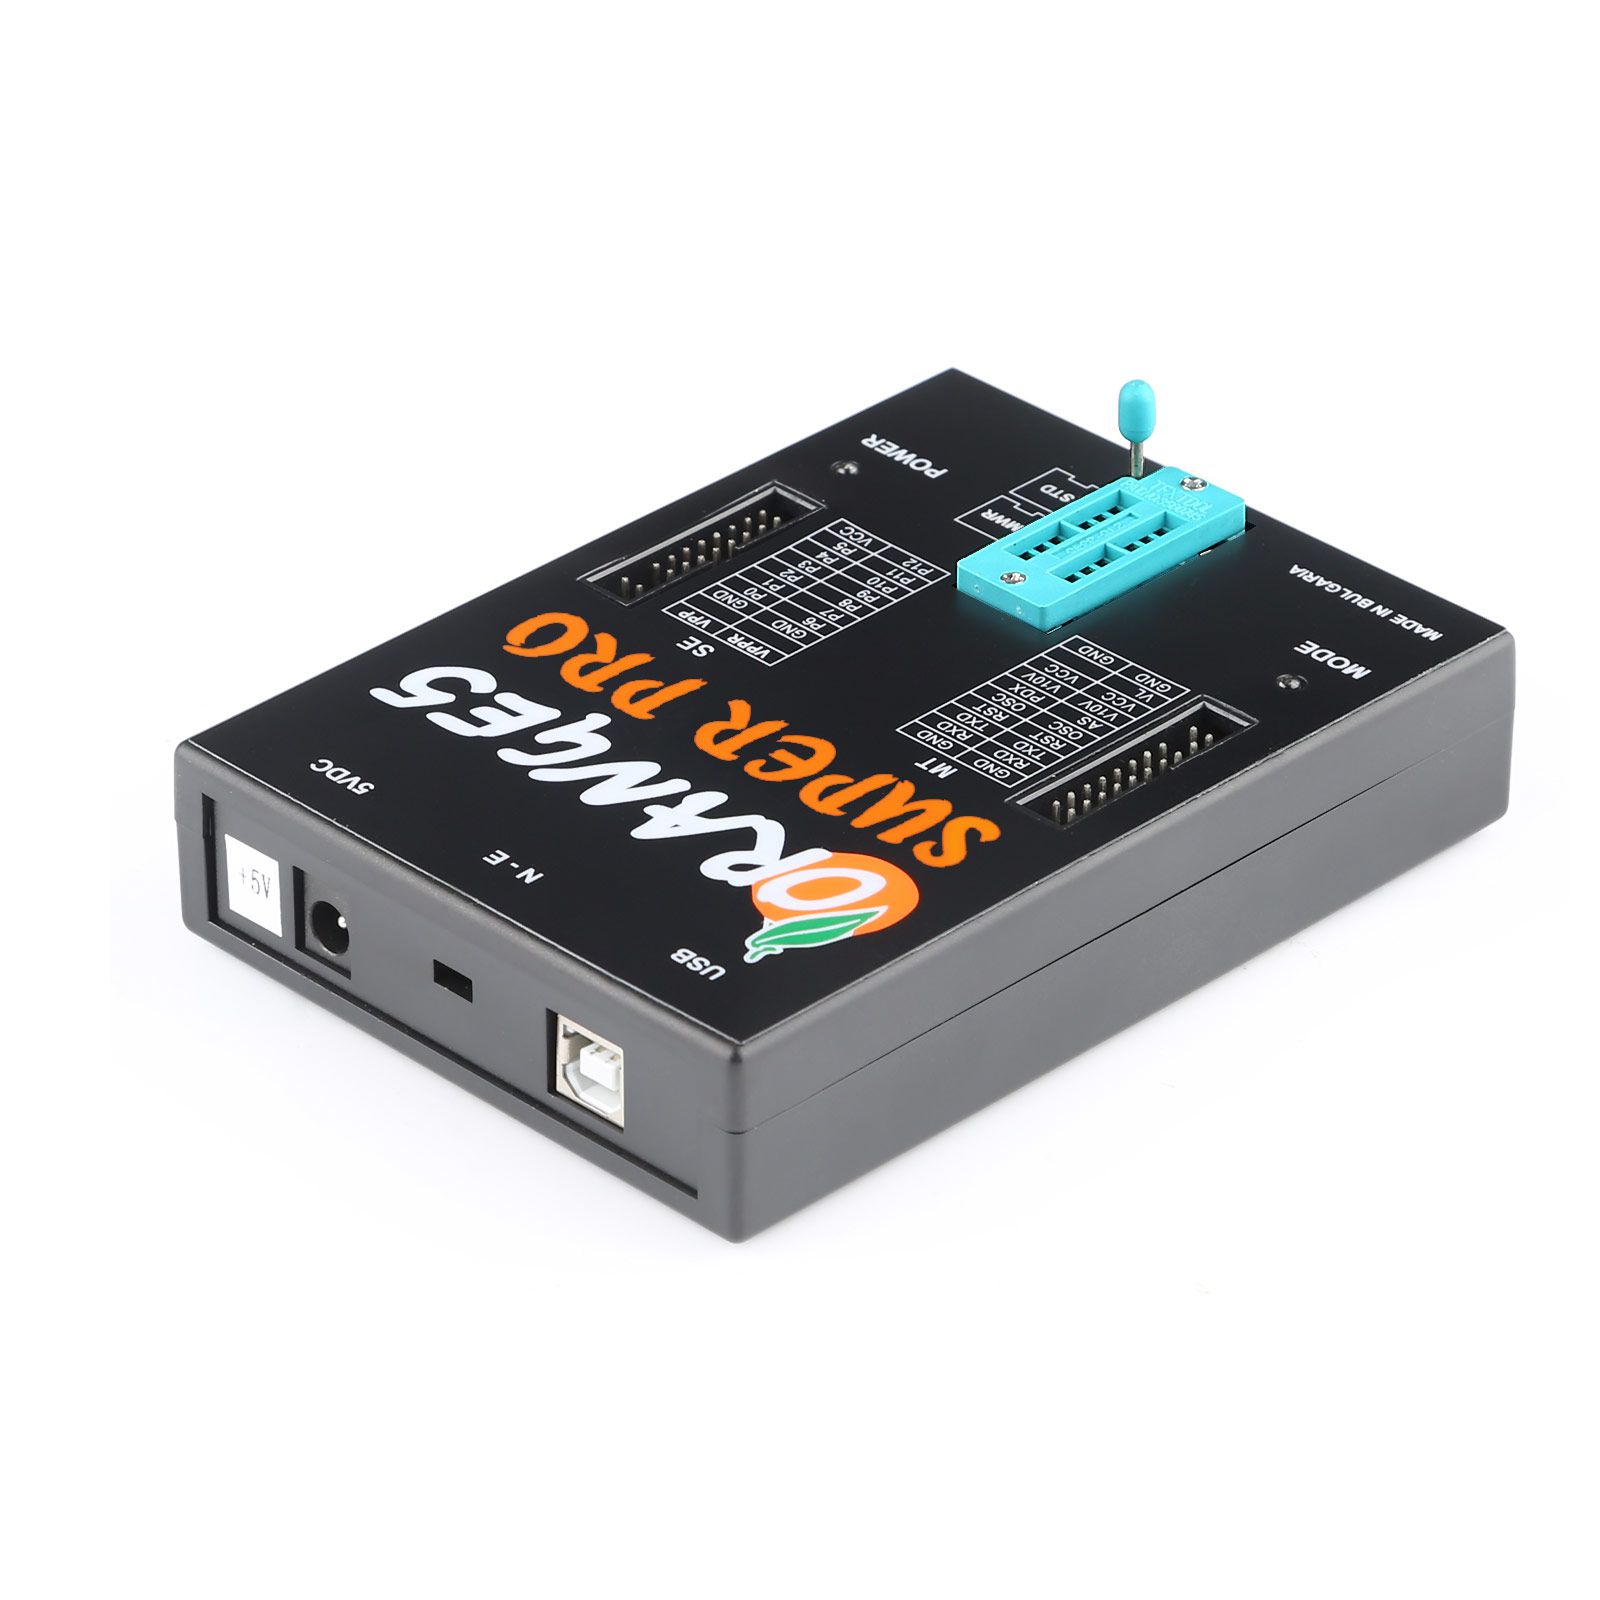 Orange5 Super Pro V1.35 프로그래밍 도구 및 어댑터 없는 USB 암호화 개 호스트